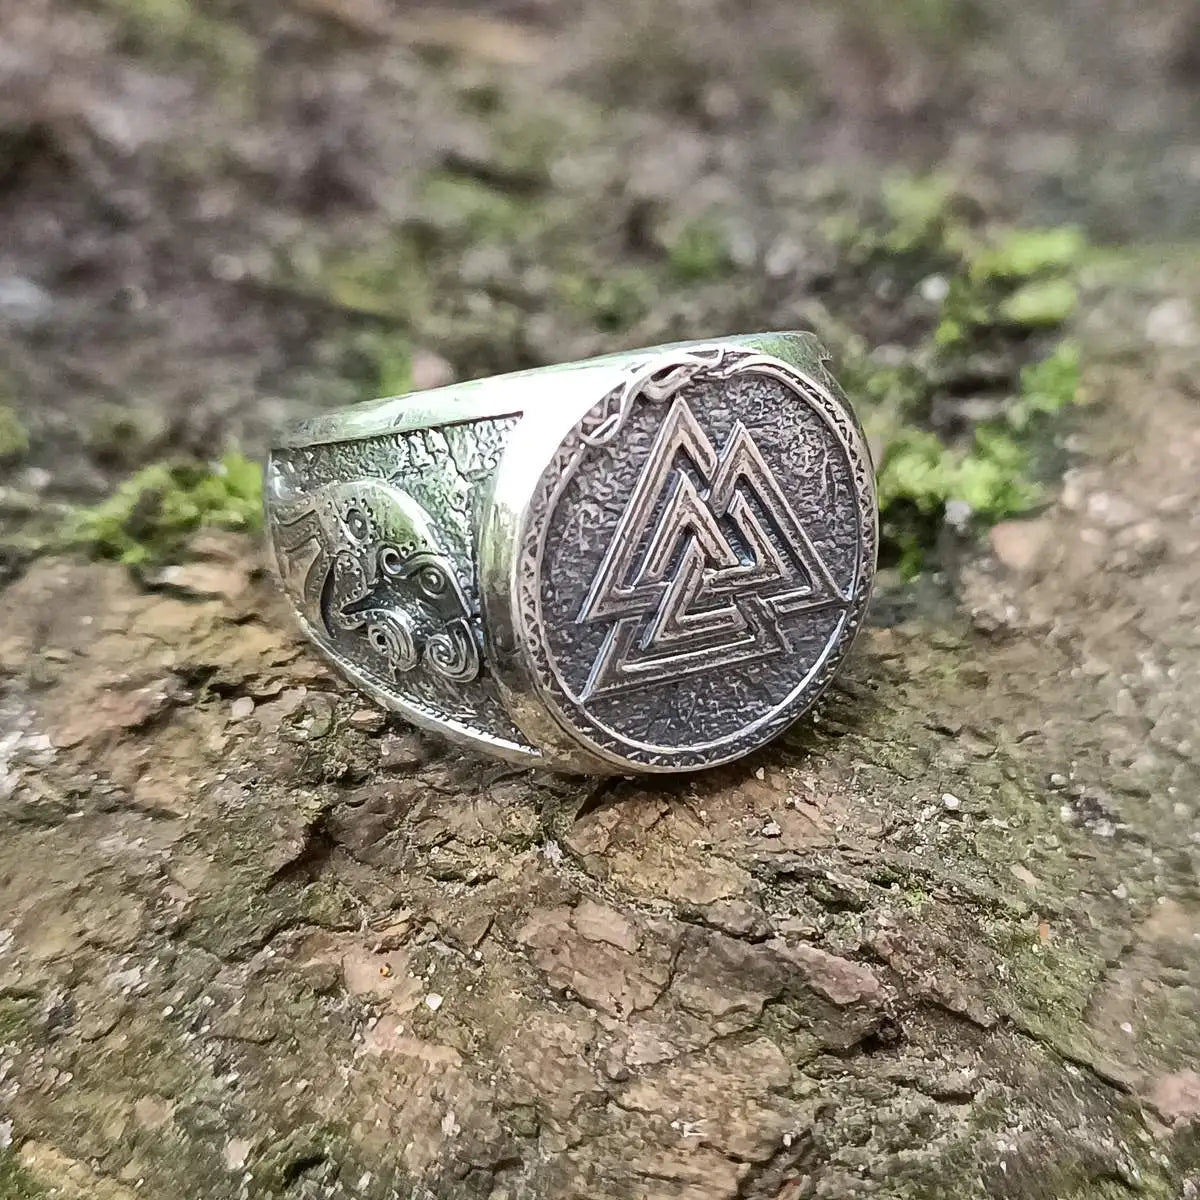 Valknut with germanic ravens silver signet ring